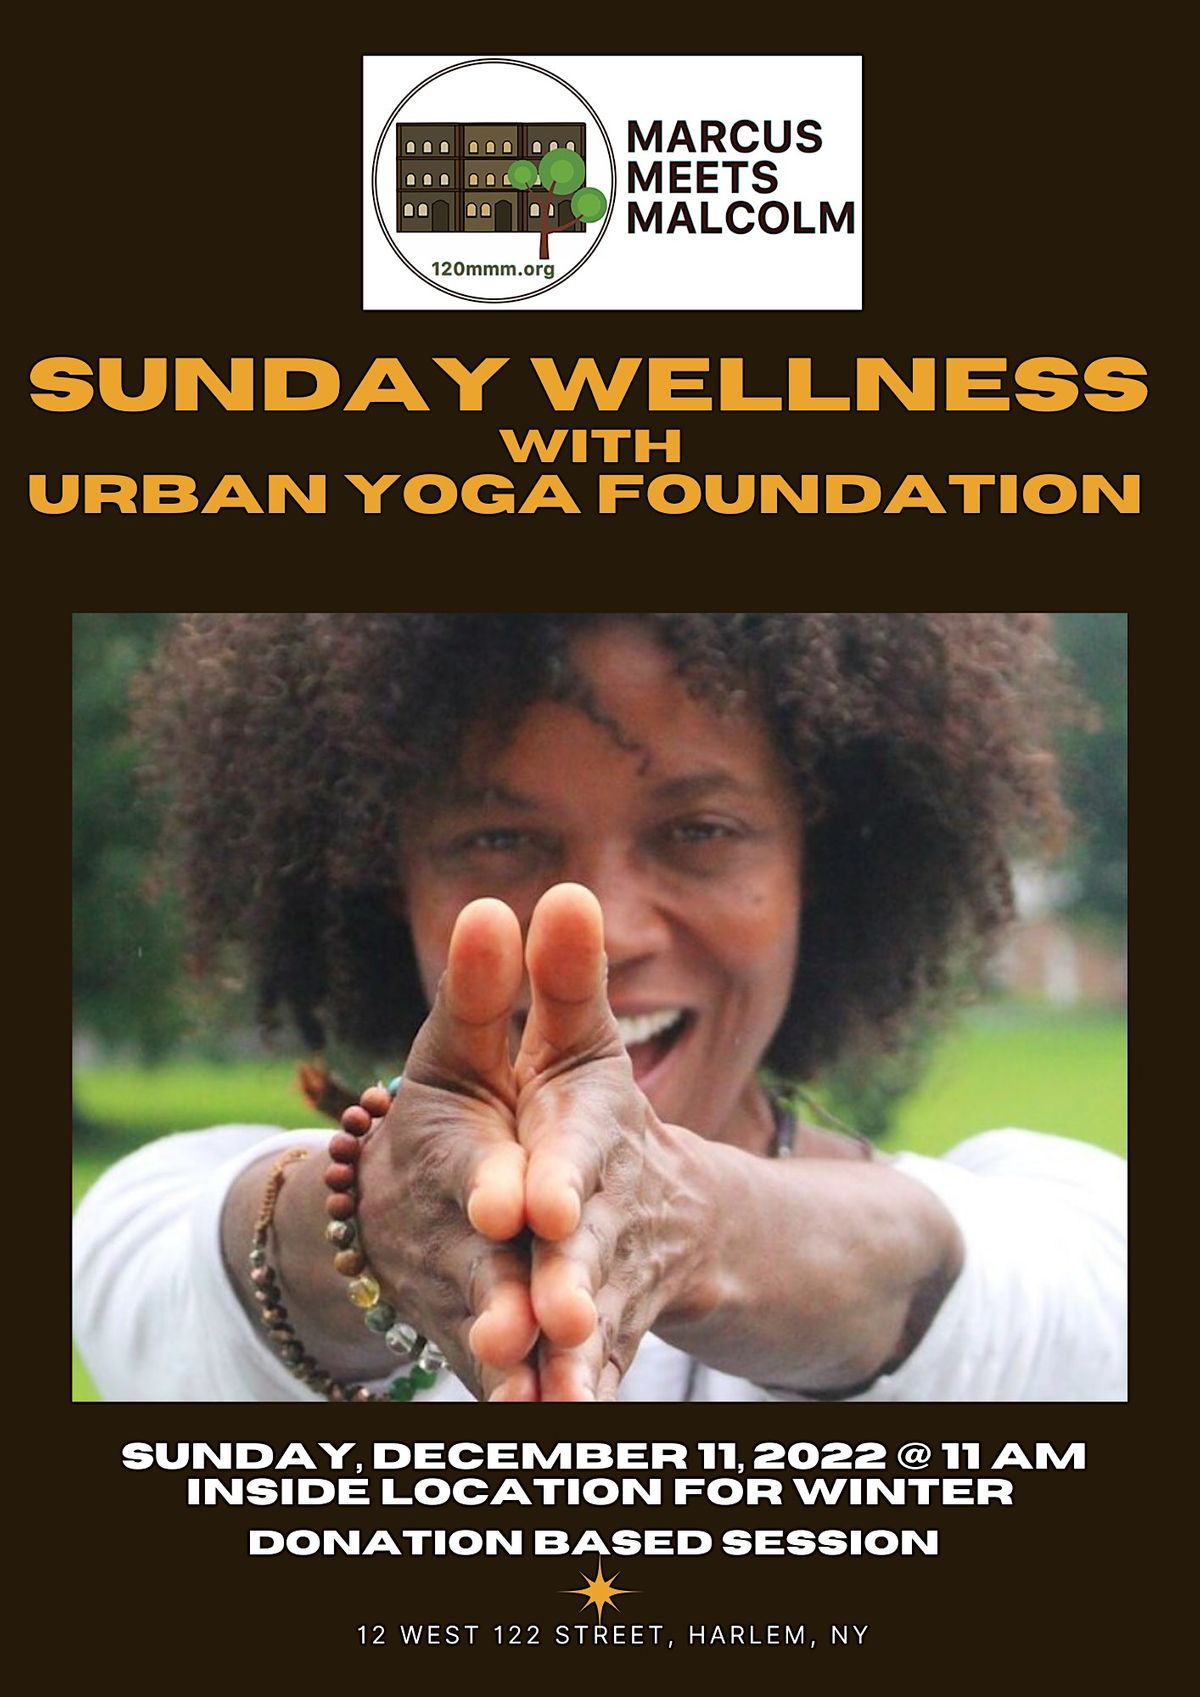 MMM\u2019s Sunday Wellness with Urban Yoga Foundation